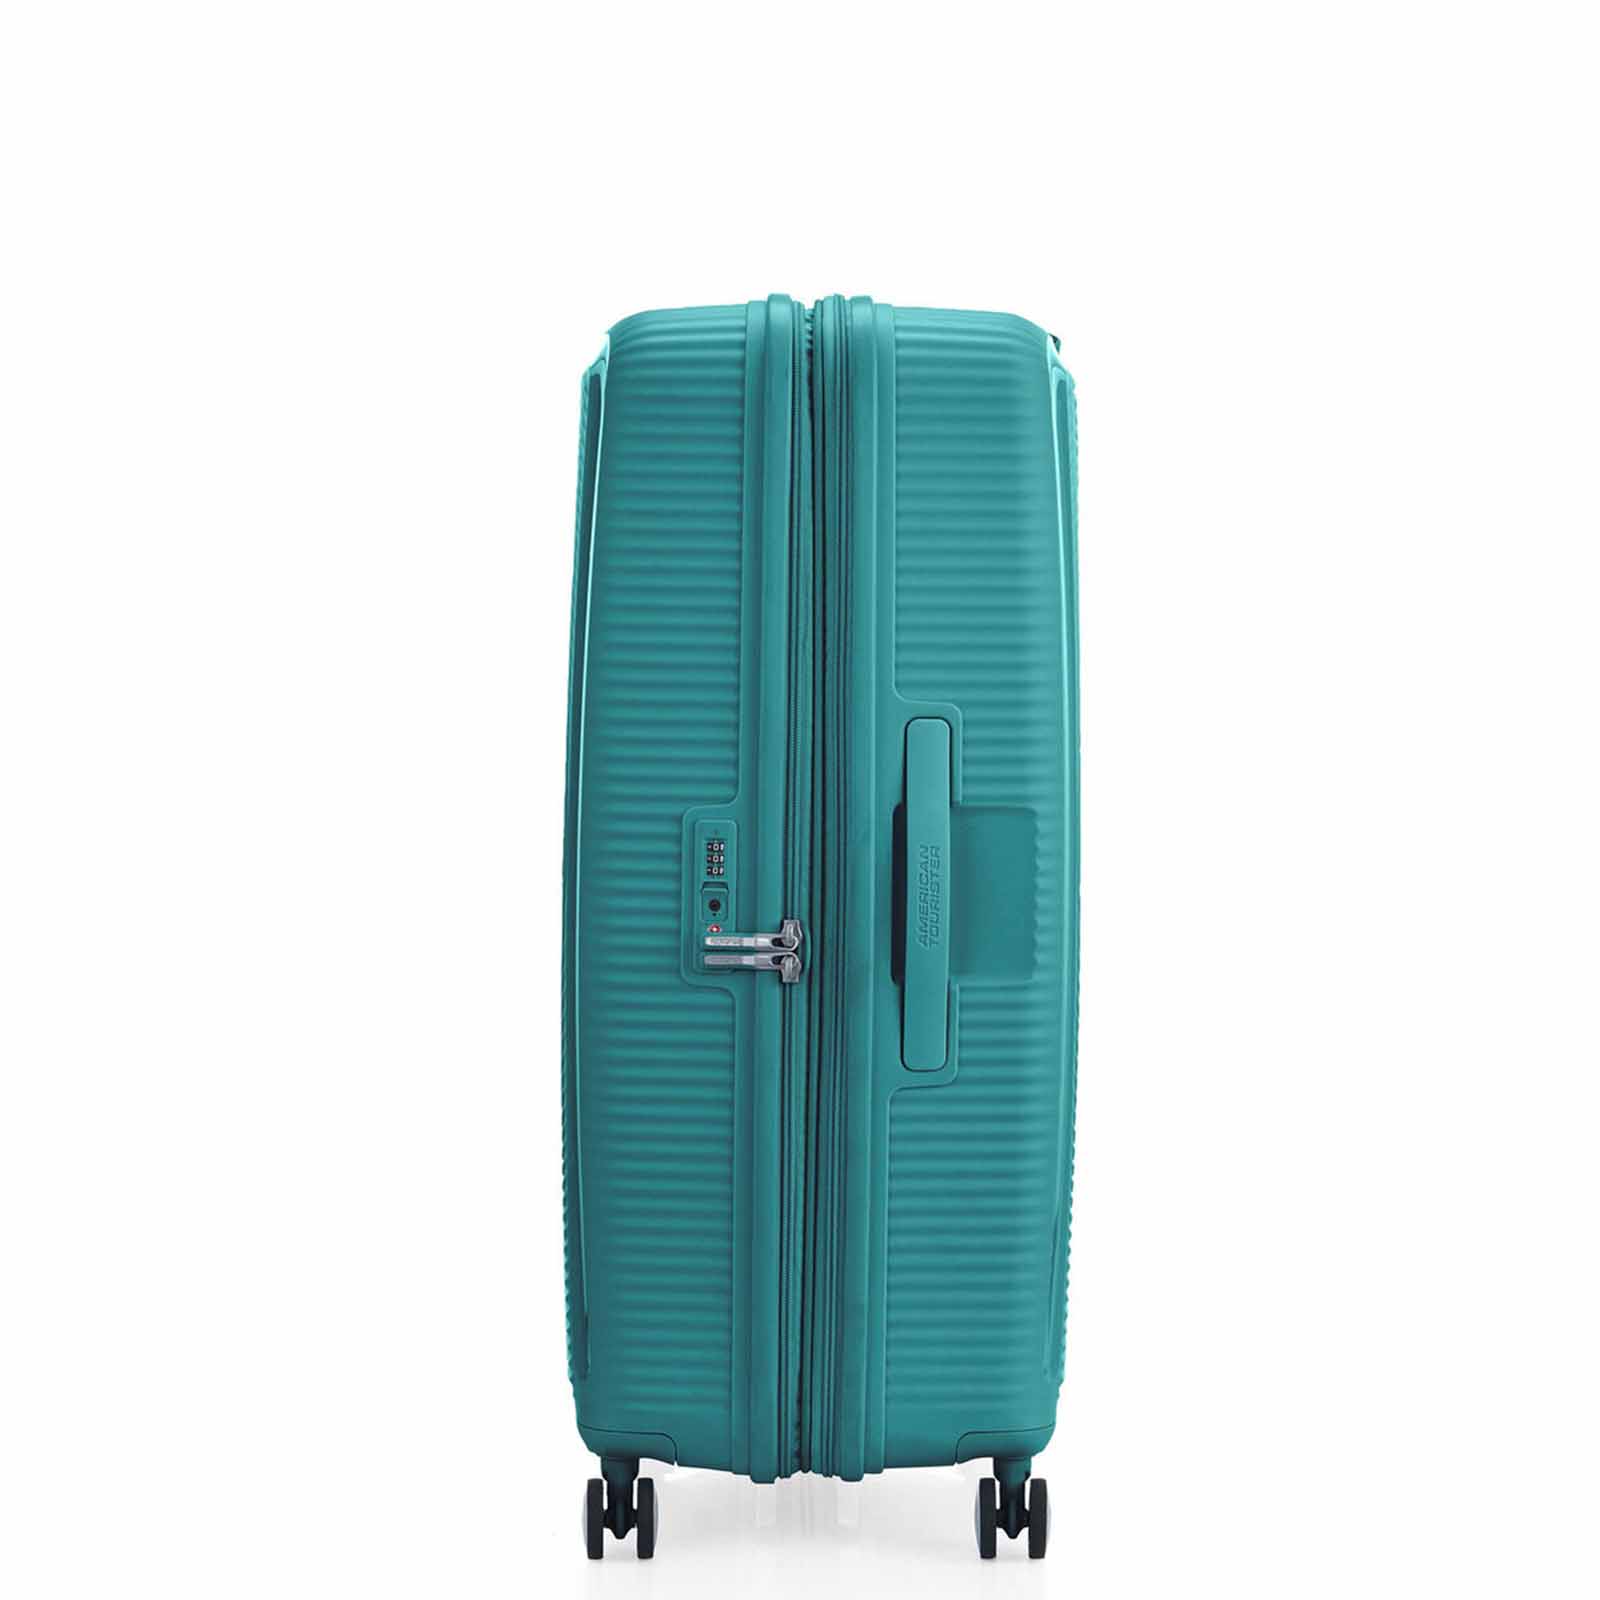 American-Tourister-Curio-2-80cm-Suitcase-Jade-Green-Lock